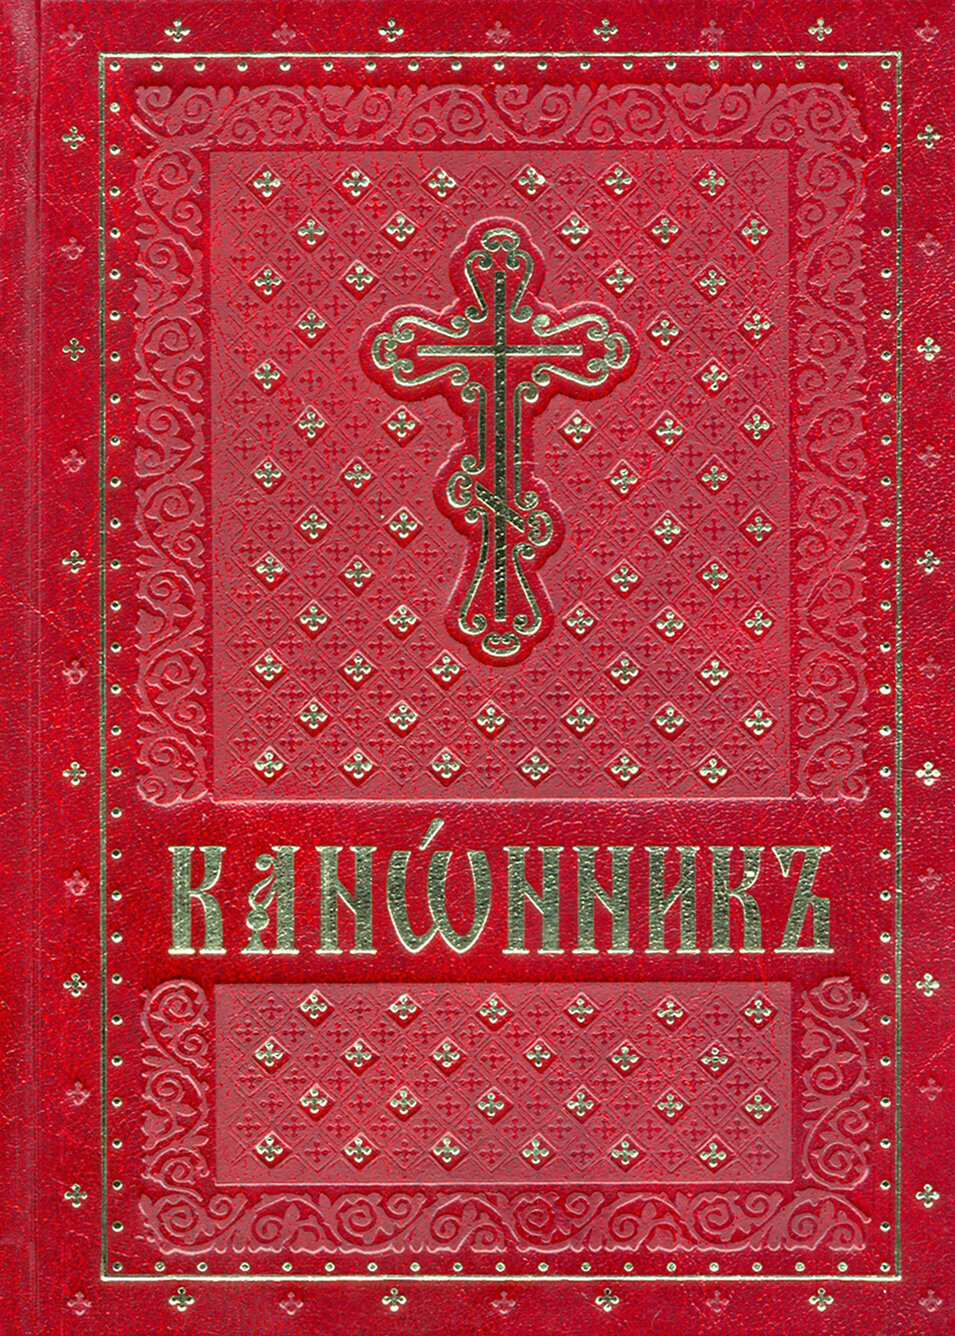 Канонник на церковно-славянском языке - фото №19